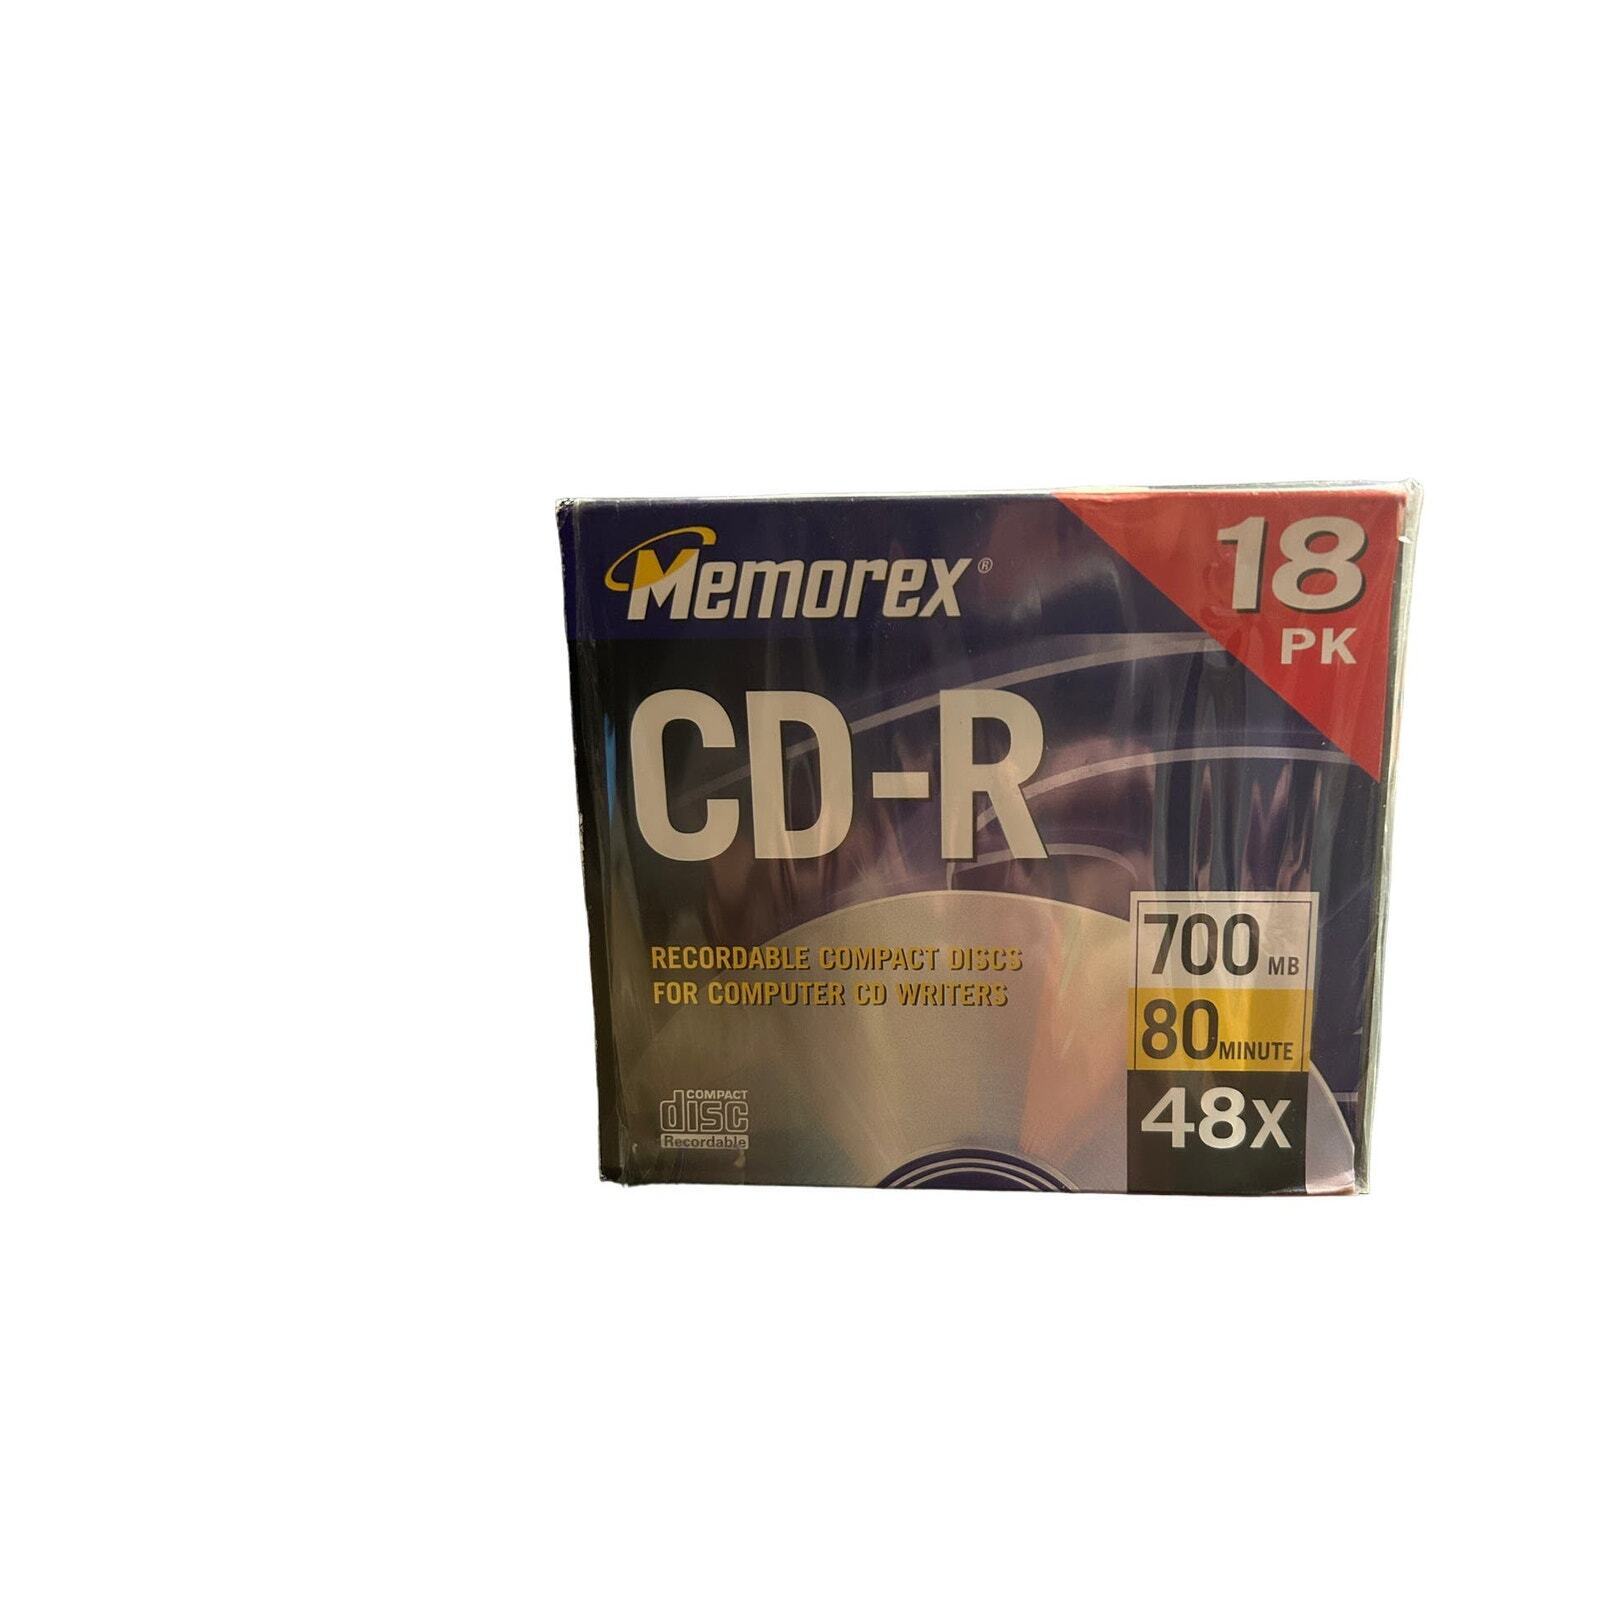 Memorex CD-R 700 MB 80 Minute 48X Open Box 16/18 *